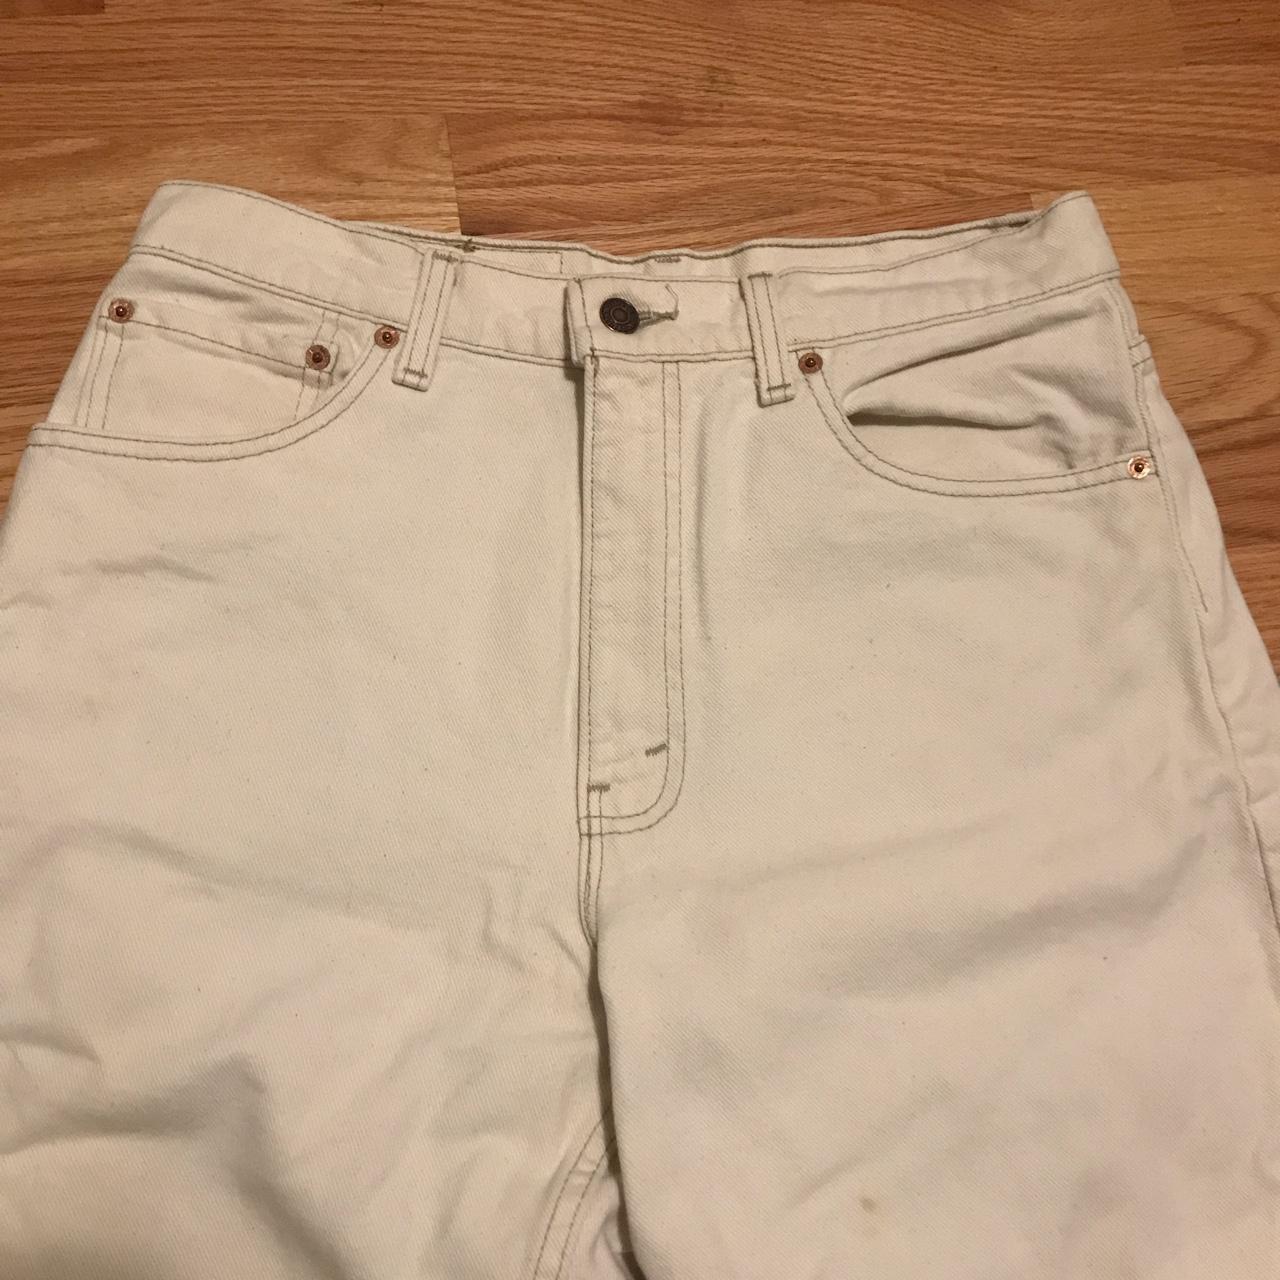 White Levi pants 33x32 - Depop